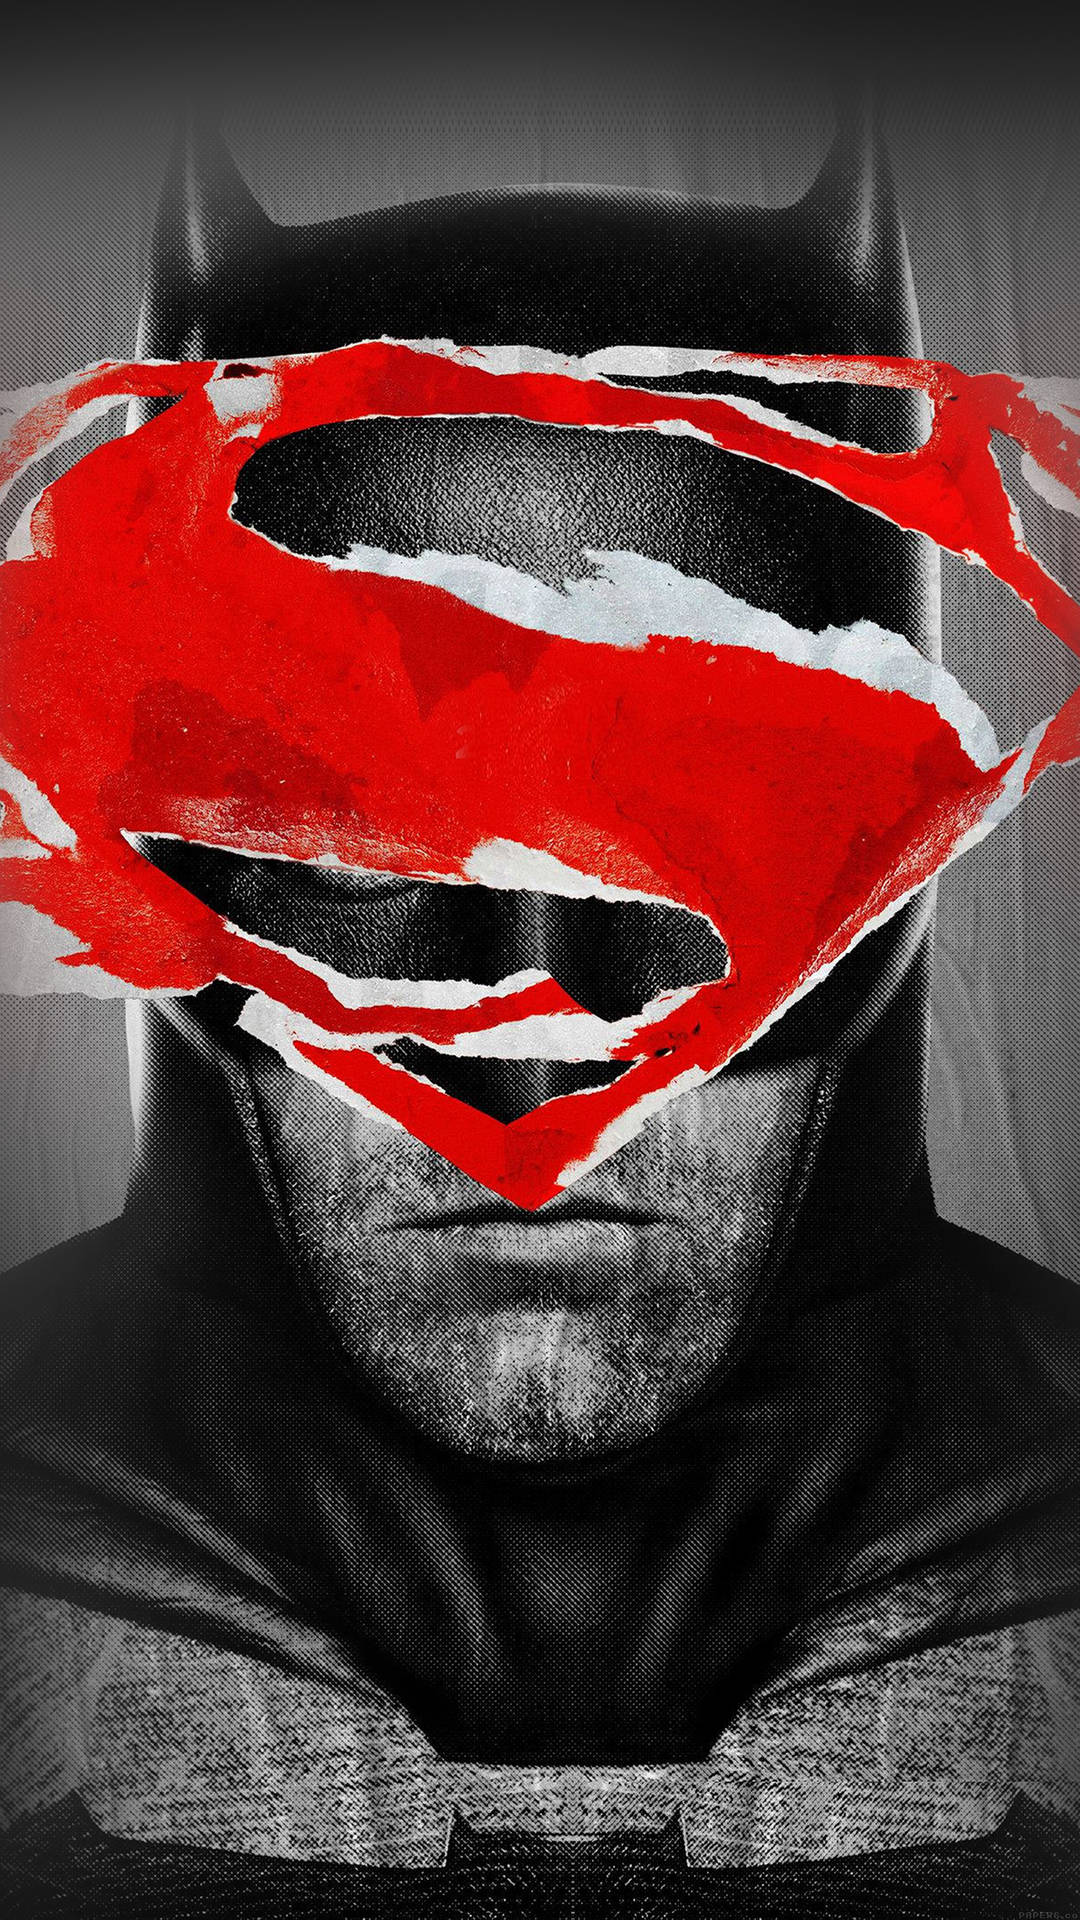 Fondode Pantalla Para Smartphone De Batman Con El Logo Rojo De Superman. Fondo de pantalla